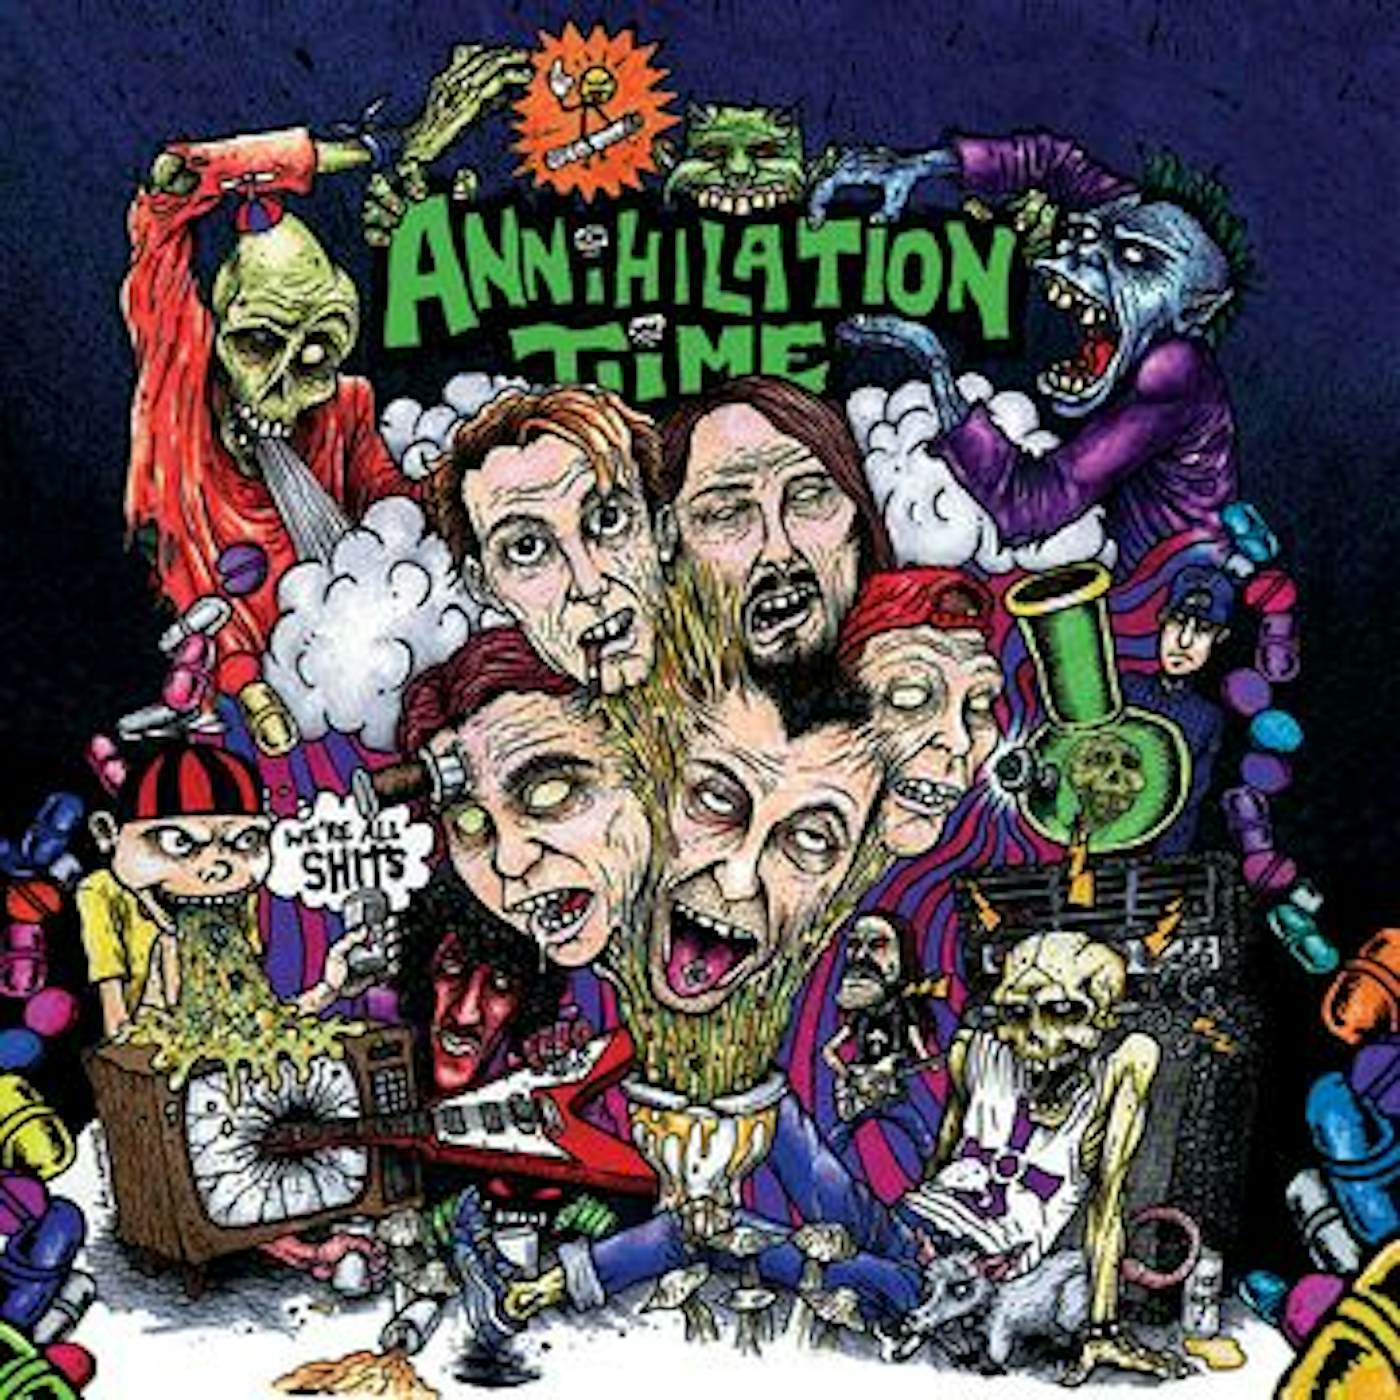 Annihilation Time II Vinyl Record